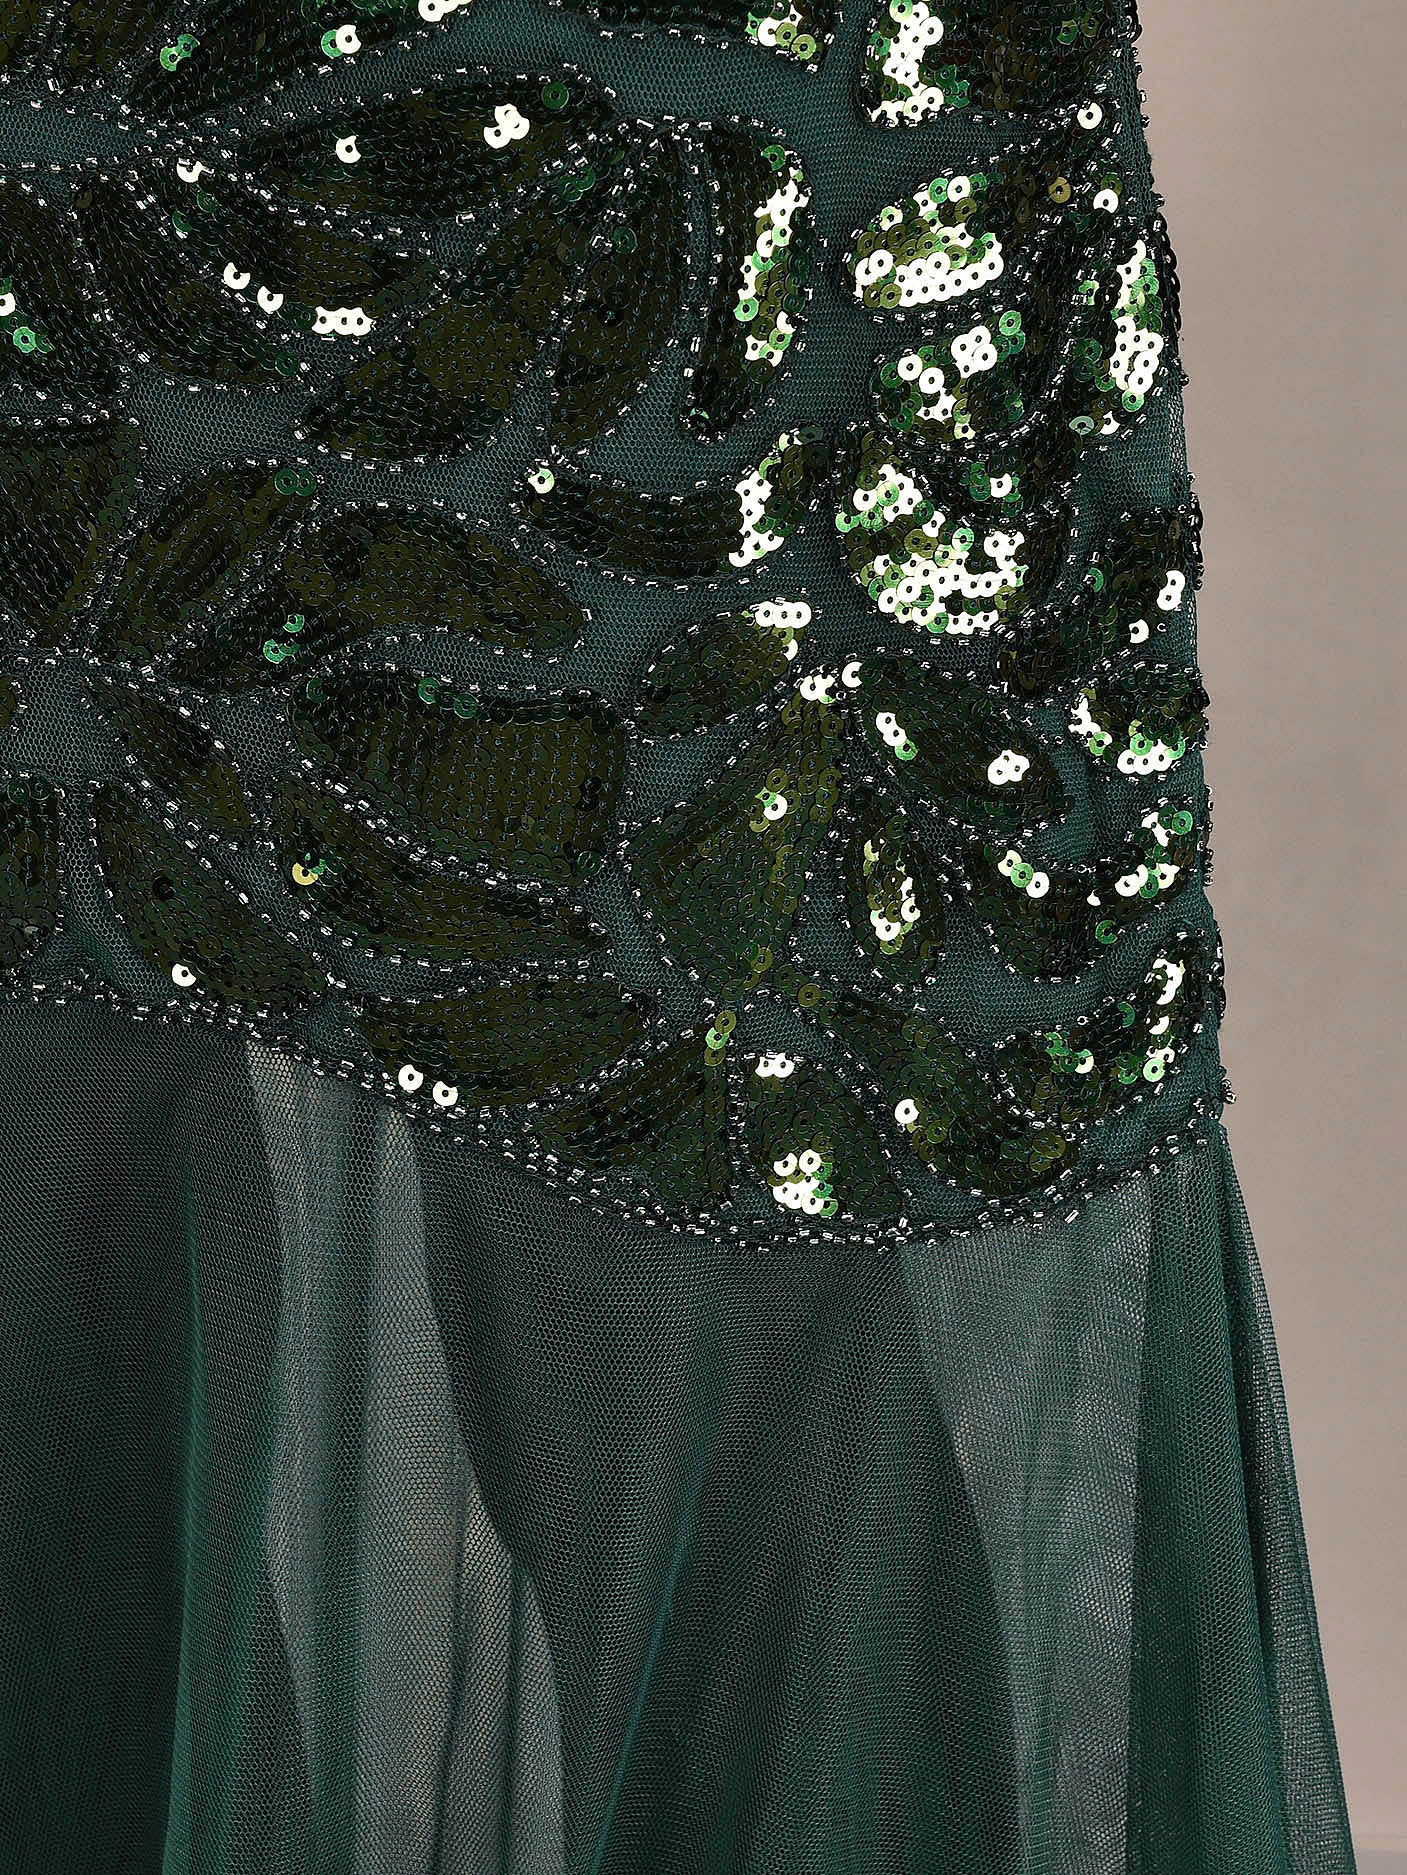 Sequined Chiffon  Dress